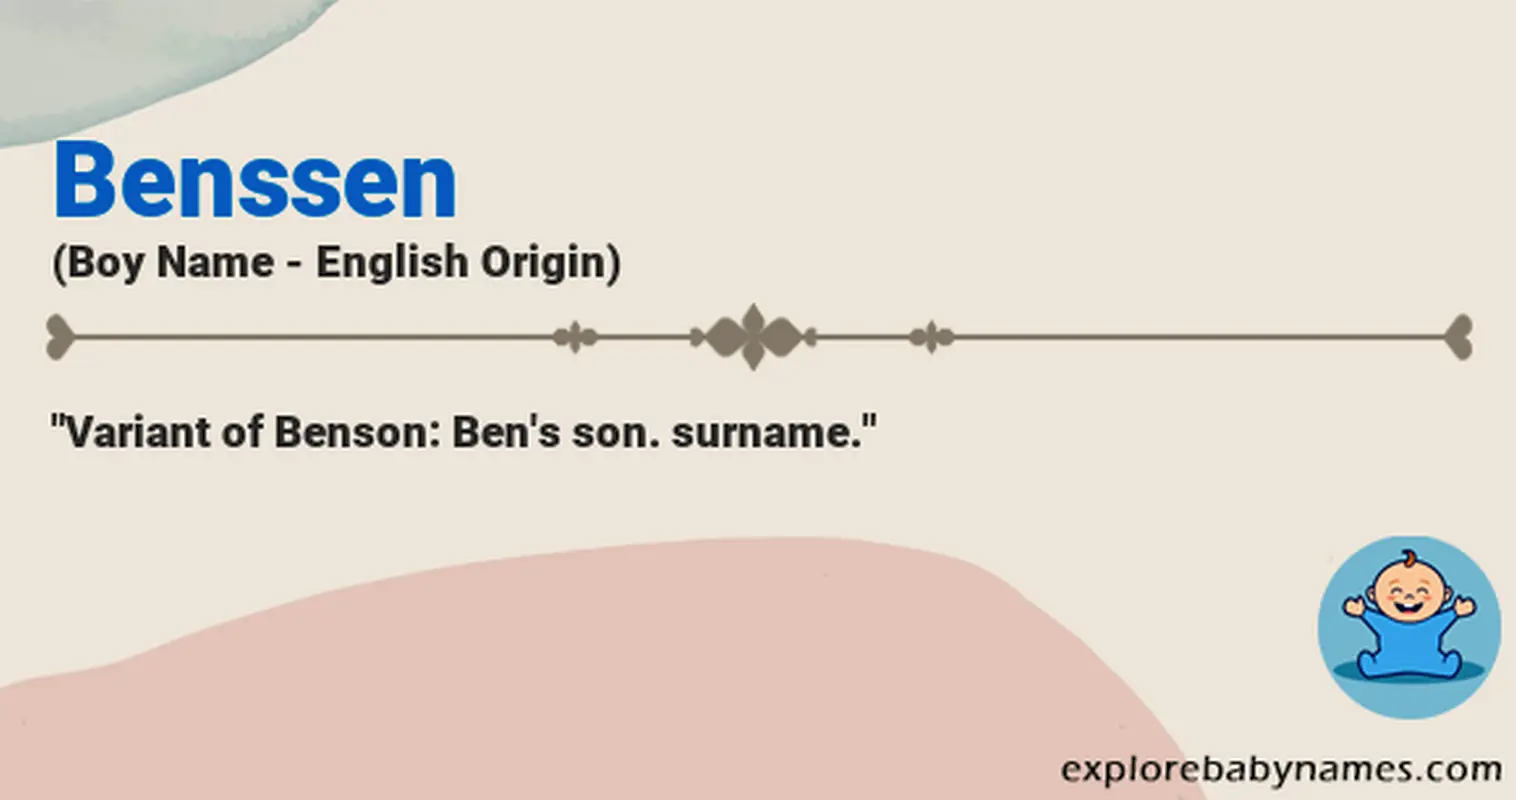 Meaning of Benssen